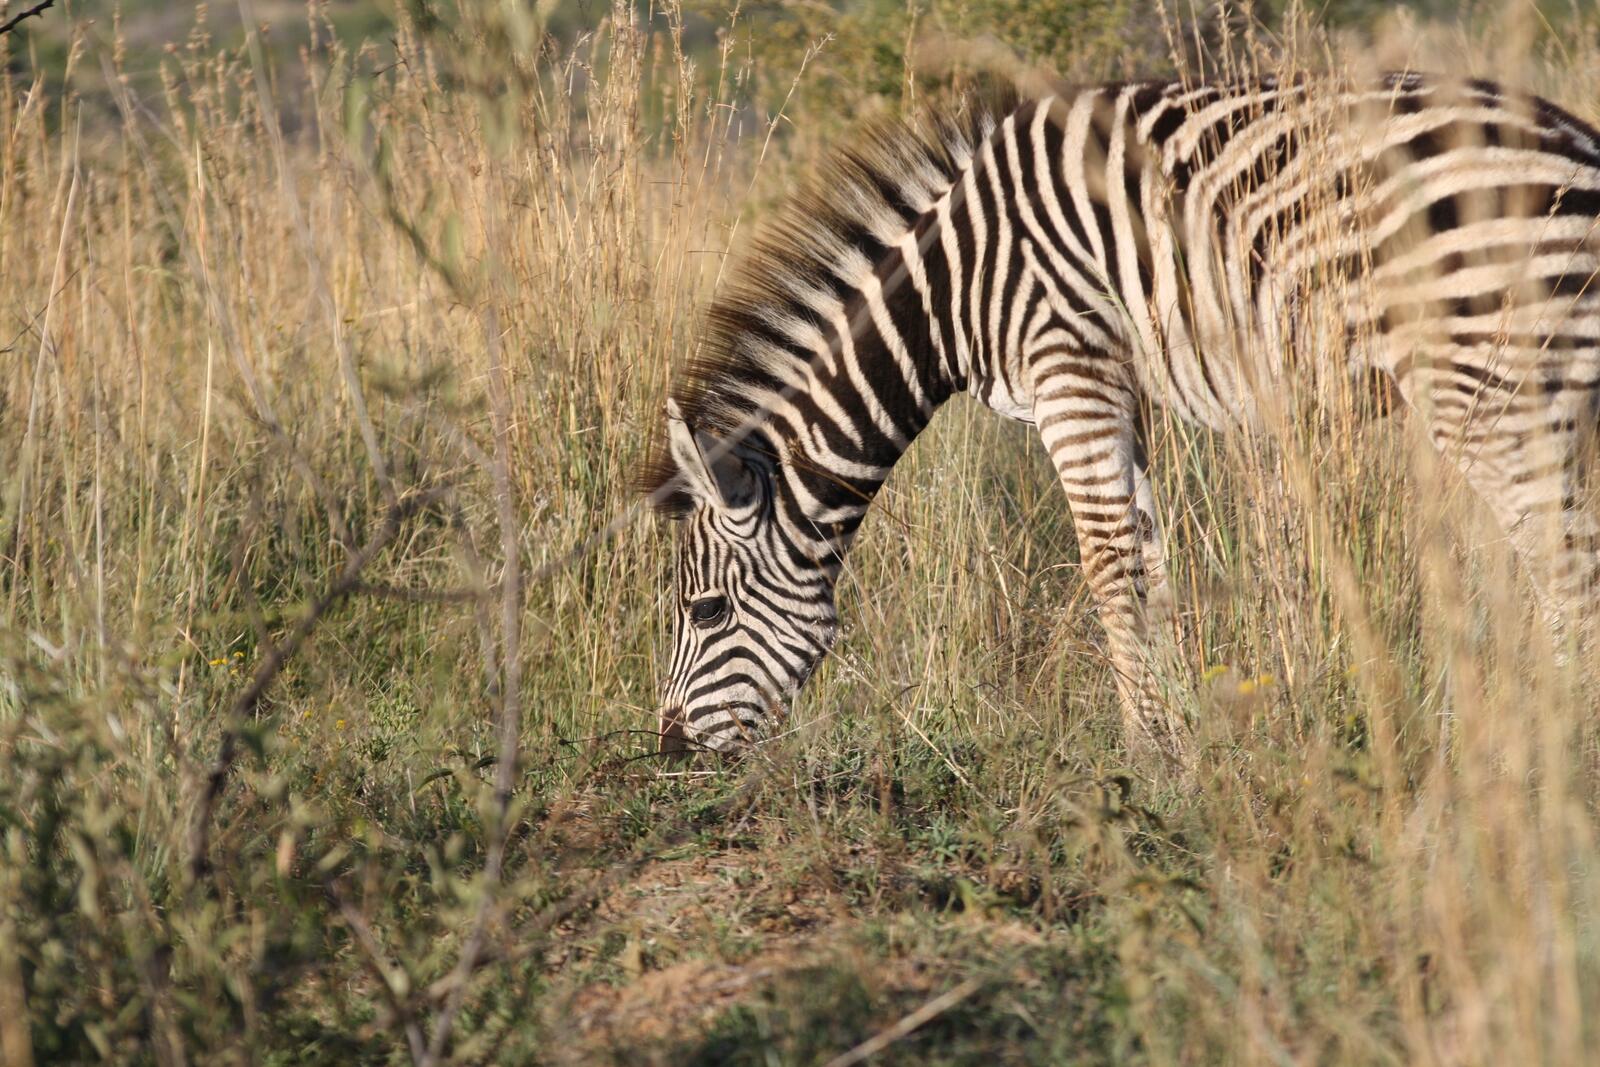 Wallpapers zebra eating grass on the desktop